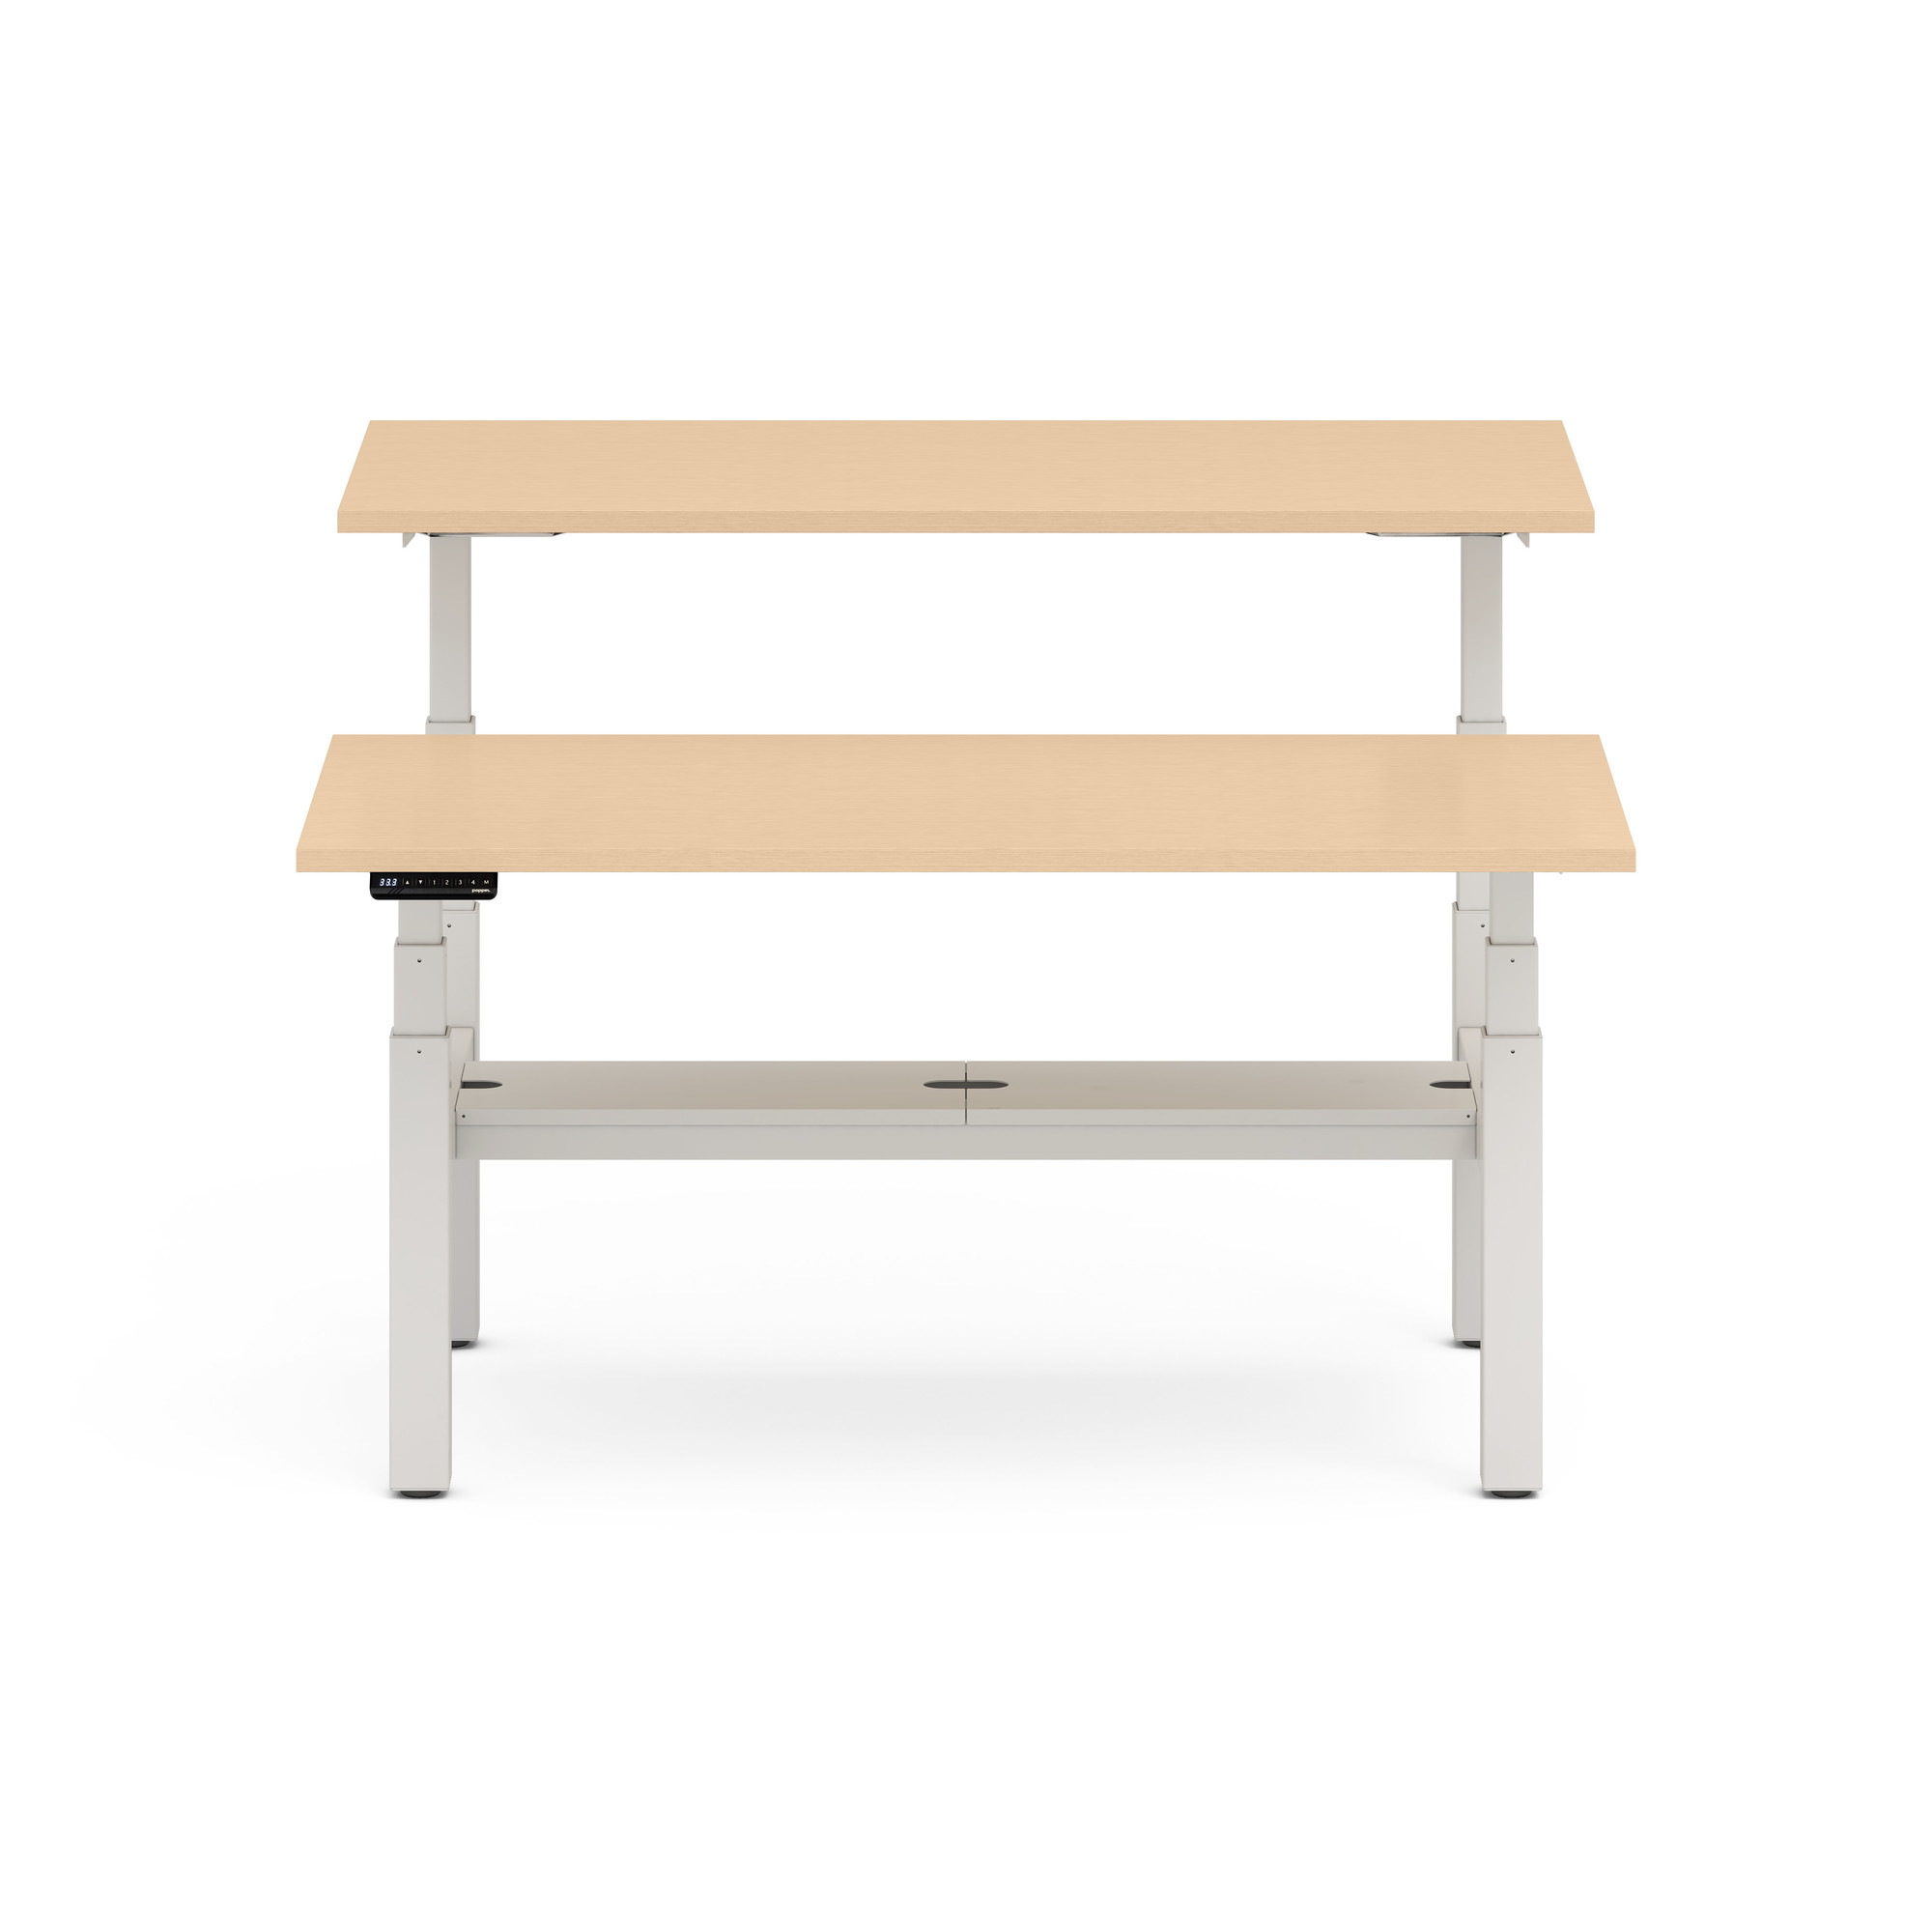 Series L Adjustable Height Double Desk for 2, Natural Oak, 60", White Legs,Natural Oak,hi-res